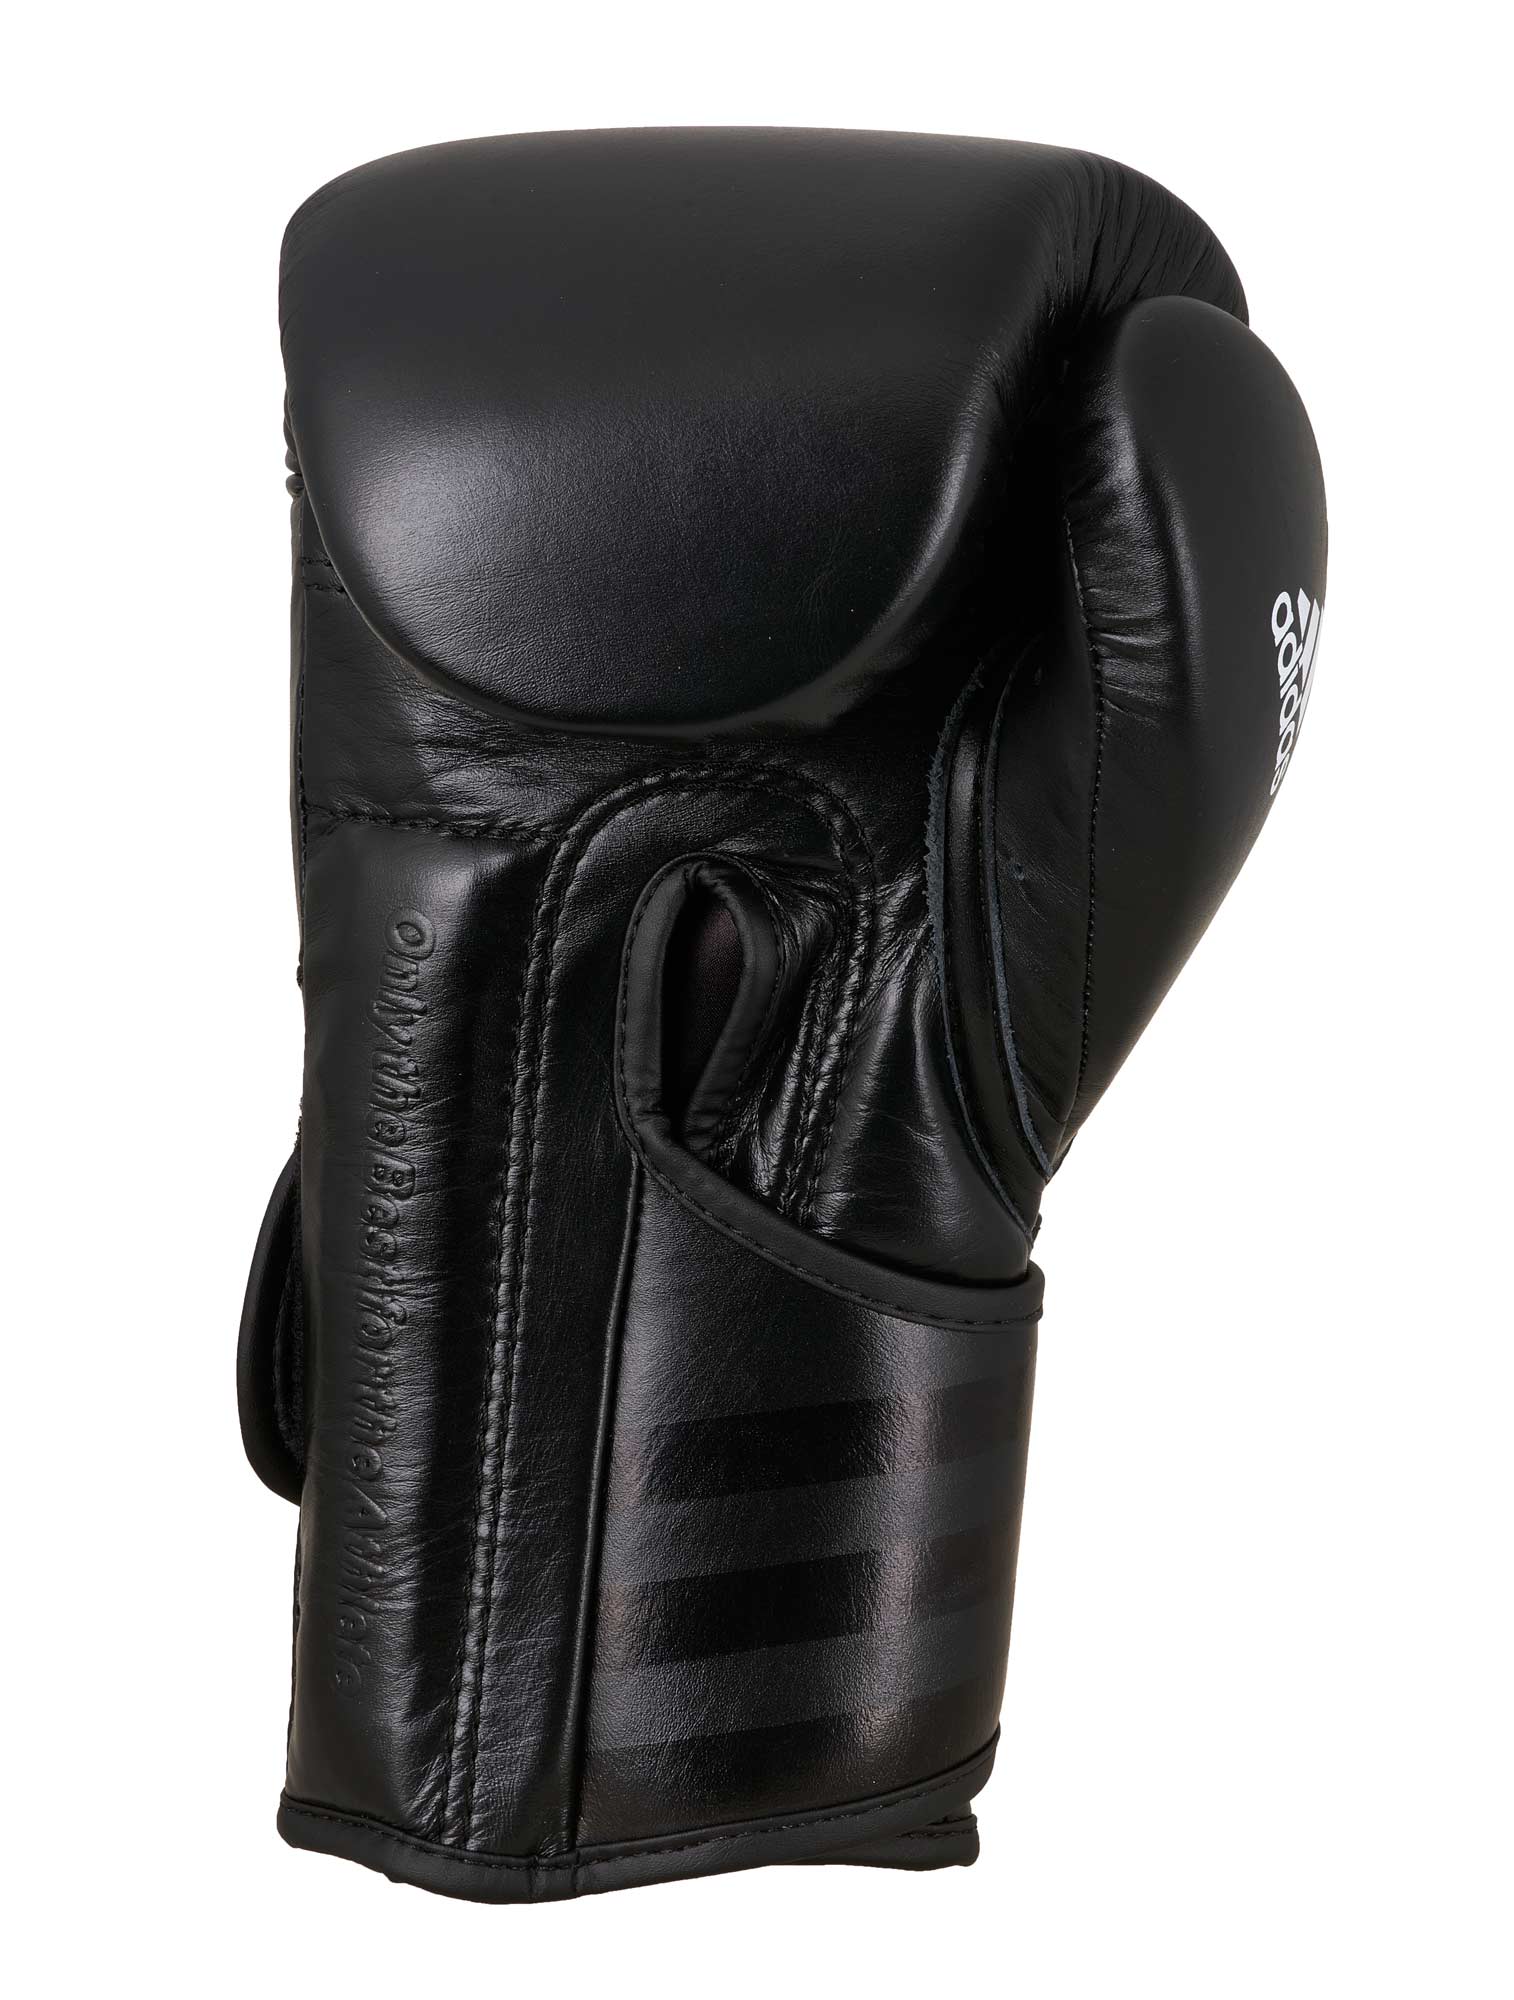 adidas boxing glove adispeed strap up ADISBG501PRO, black/white